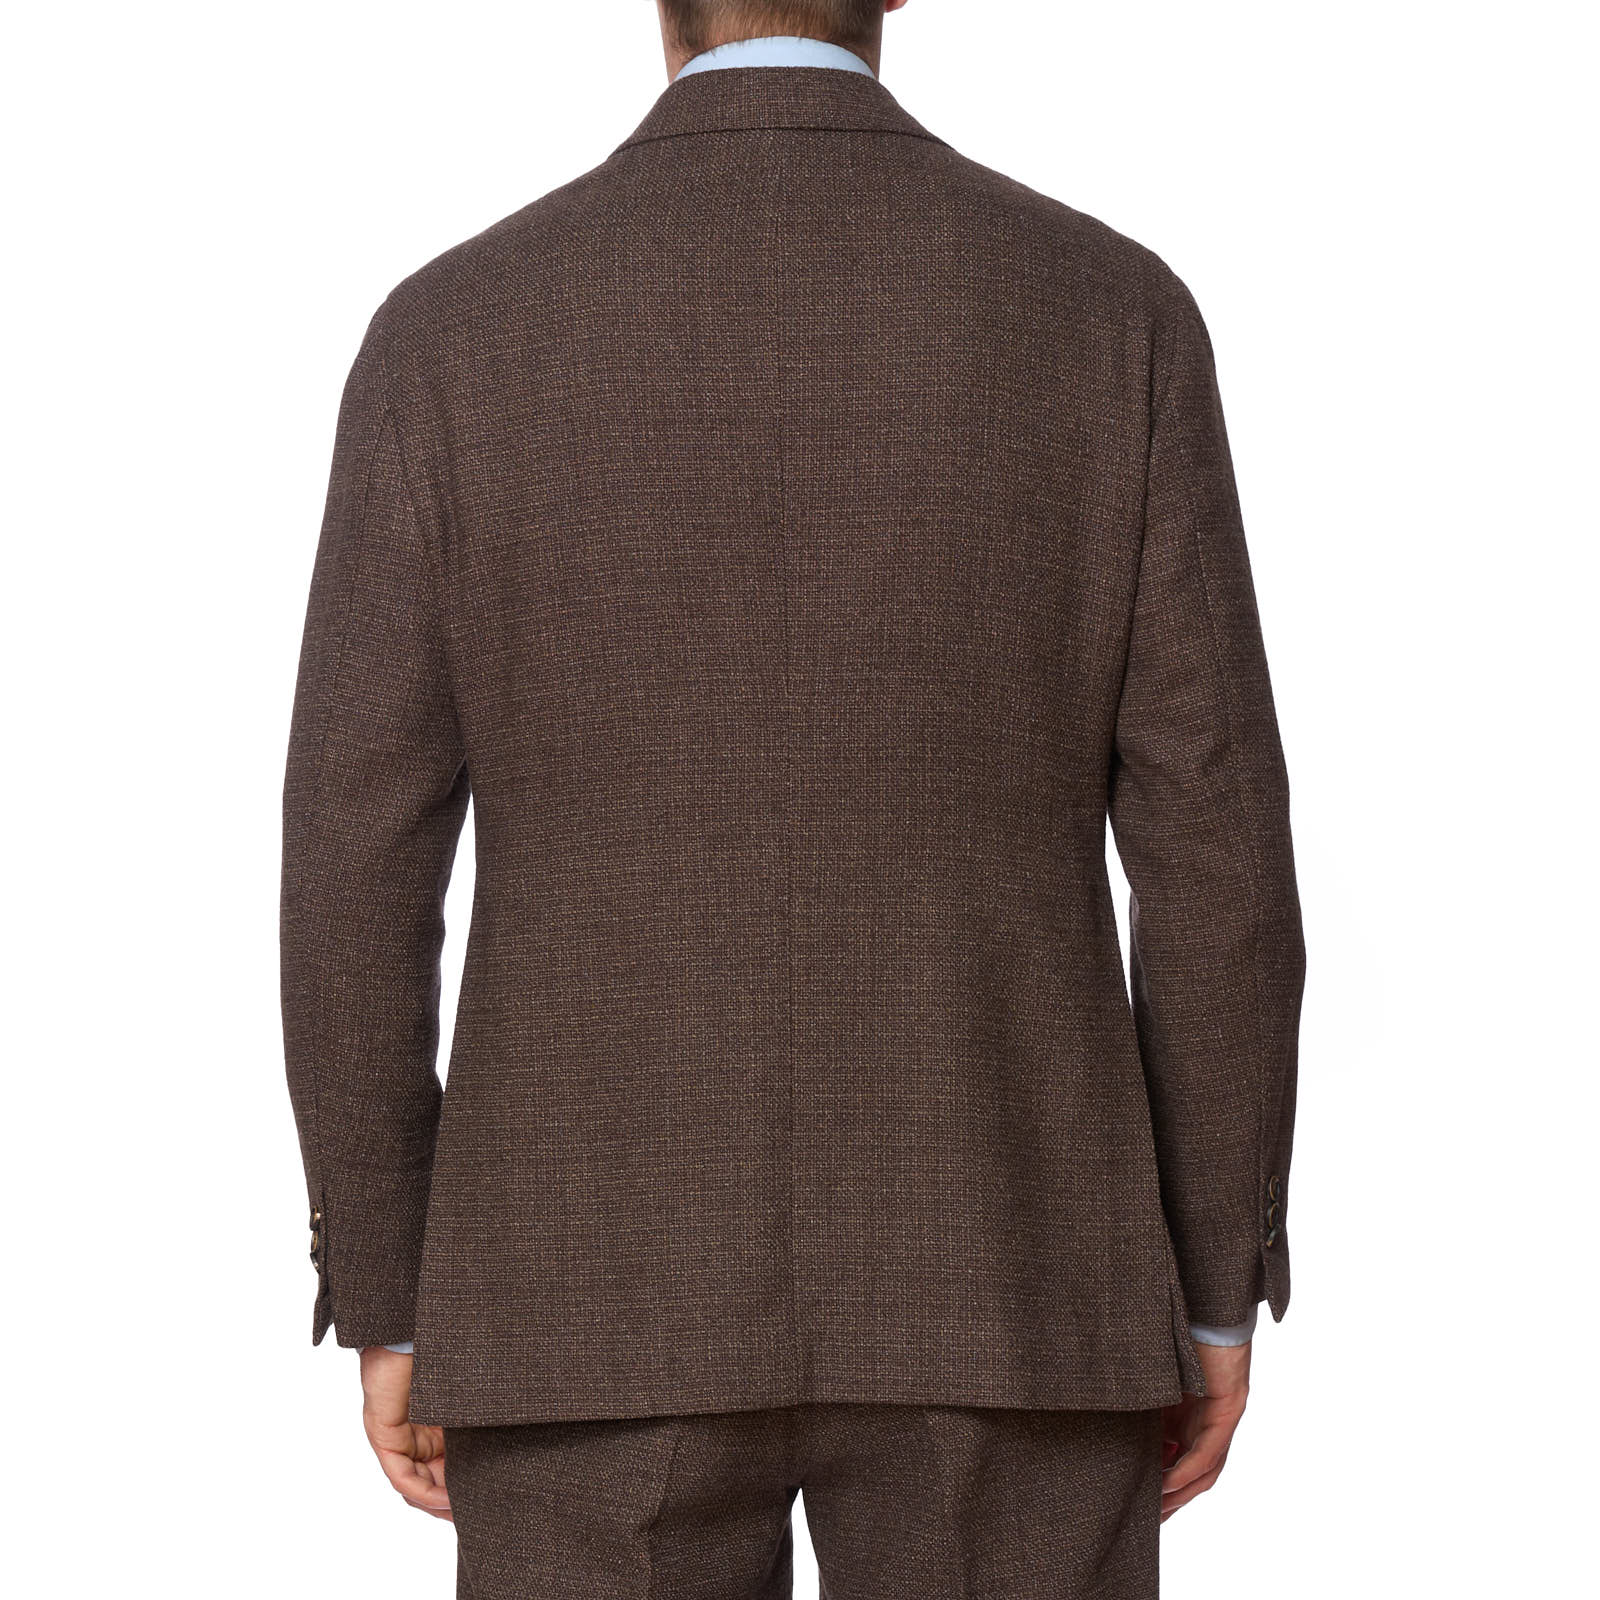 SARTORIA CHIAIA Handmade Bespoke Brown Loro Piana Cashmere Suit EU 54 NEW US 44